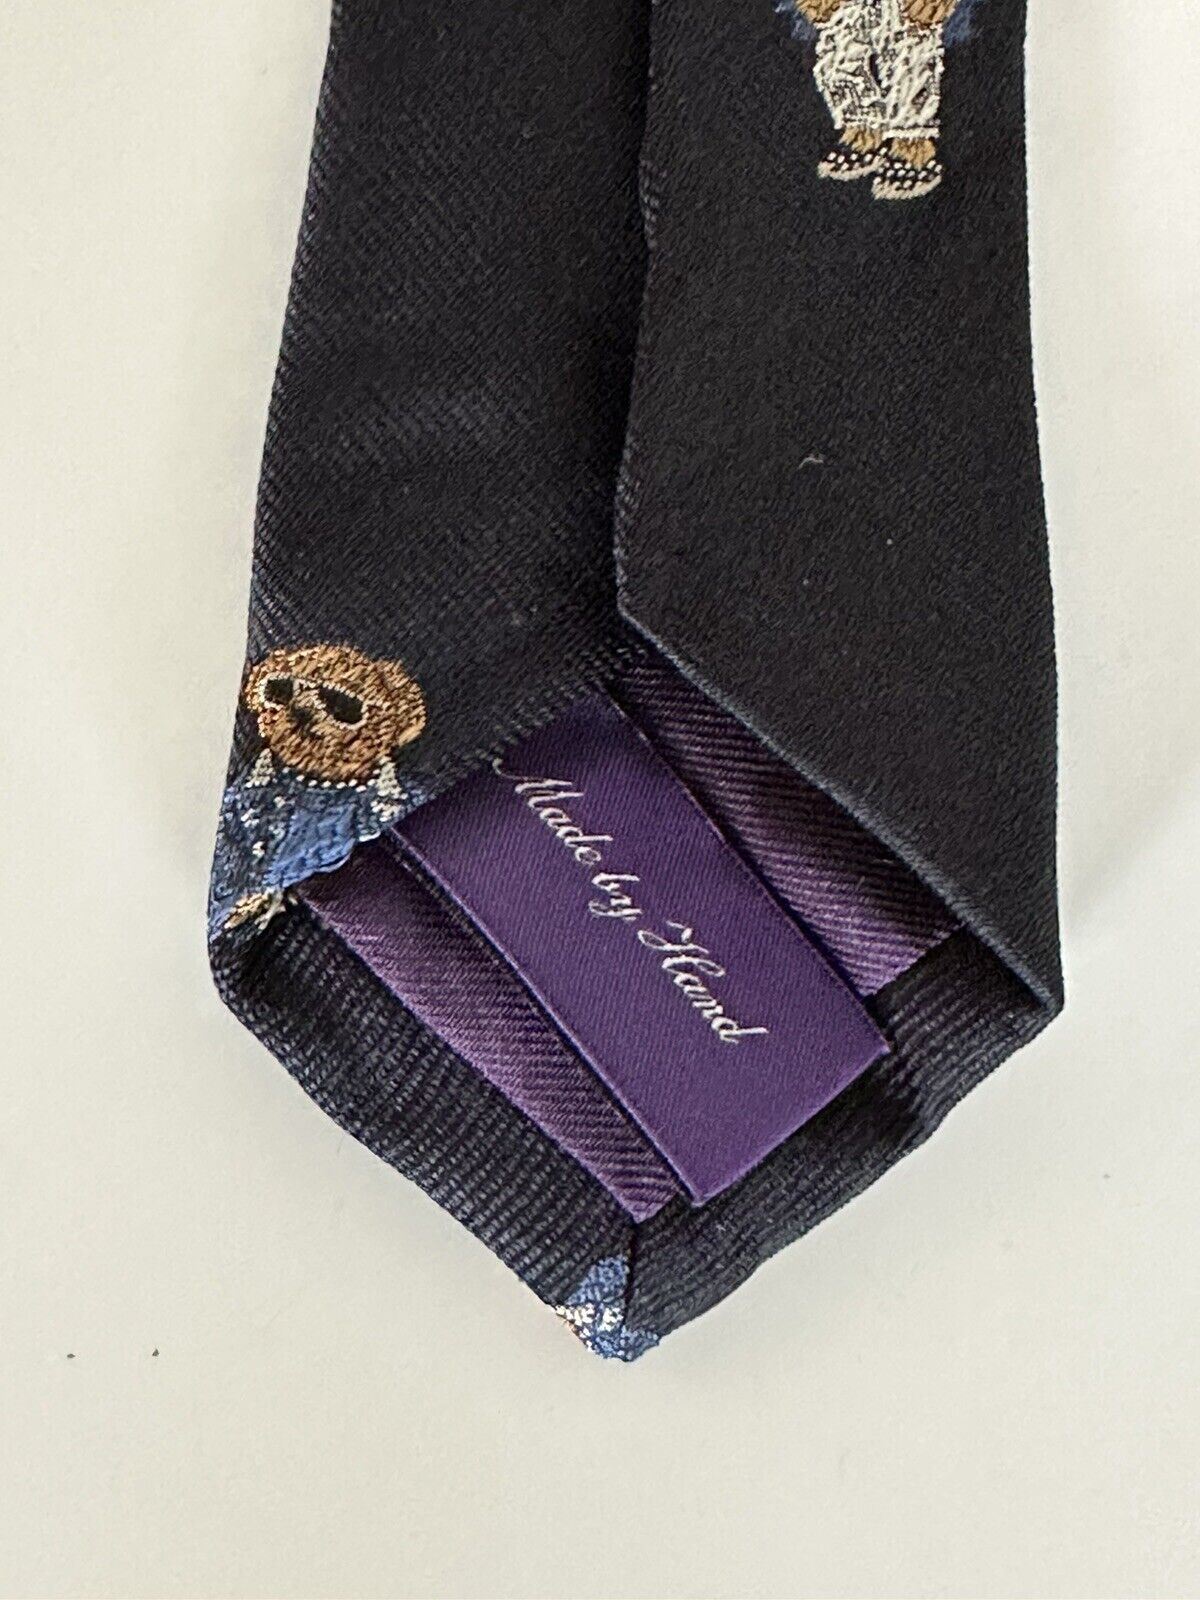 NWT $195 Ralph Lauren Purple Label Bear Neck Tie 100% Silk Handmade Italy Blue